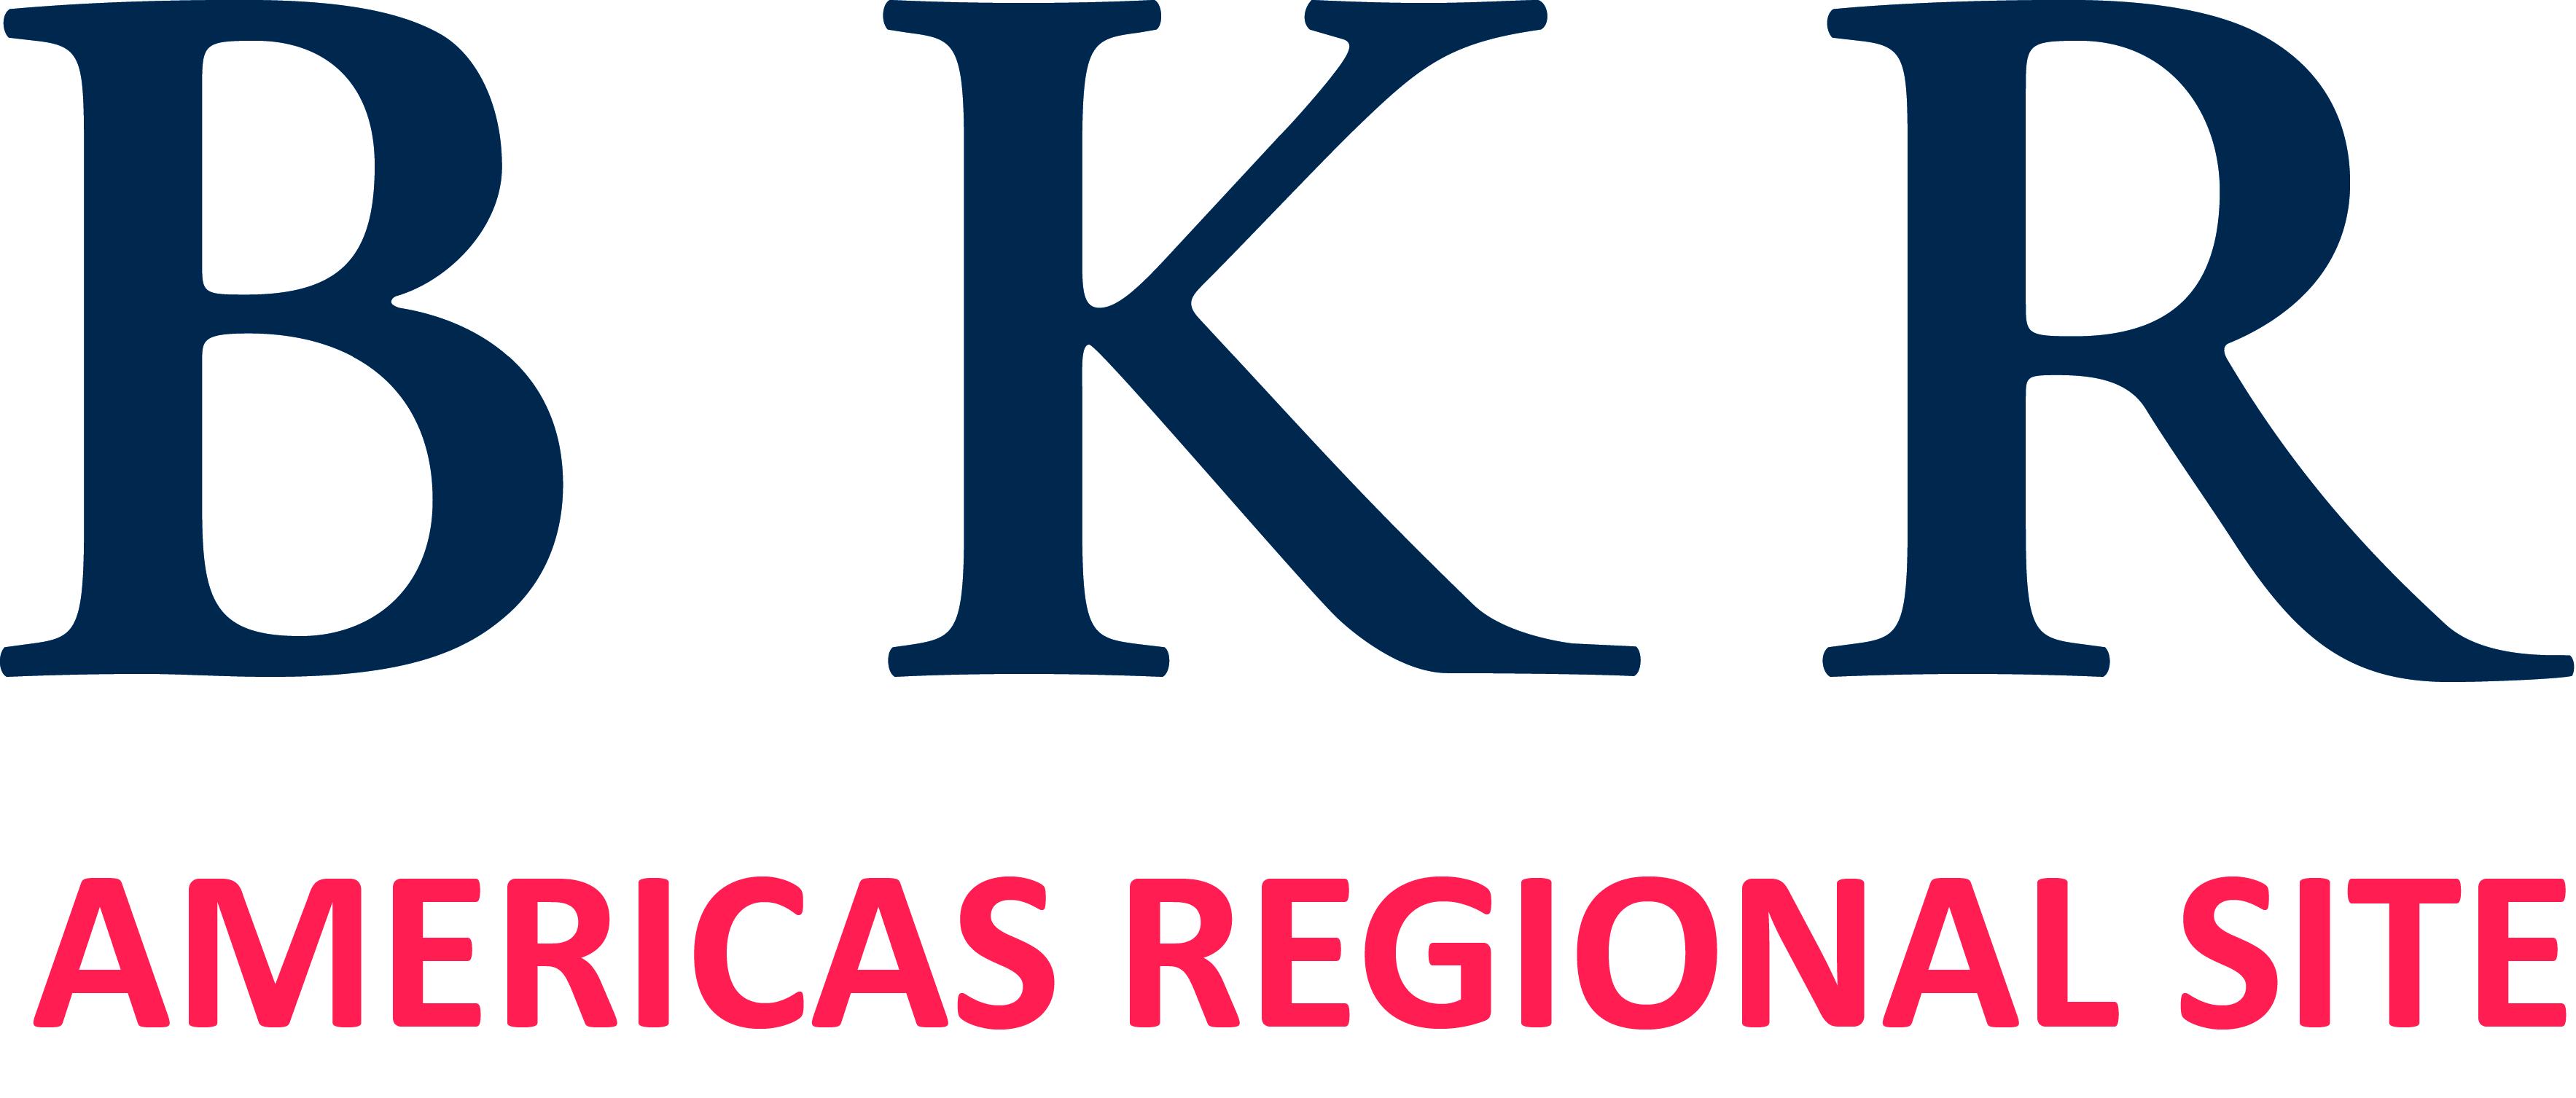 BKR Americas Region